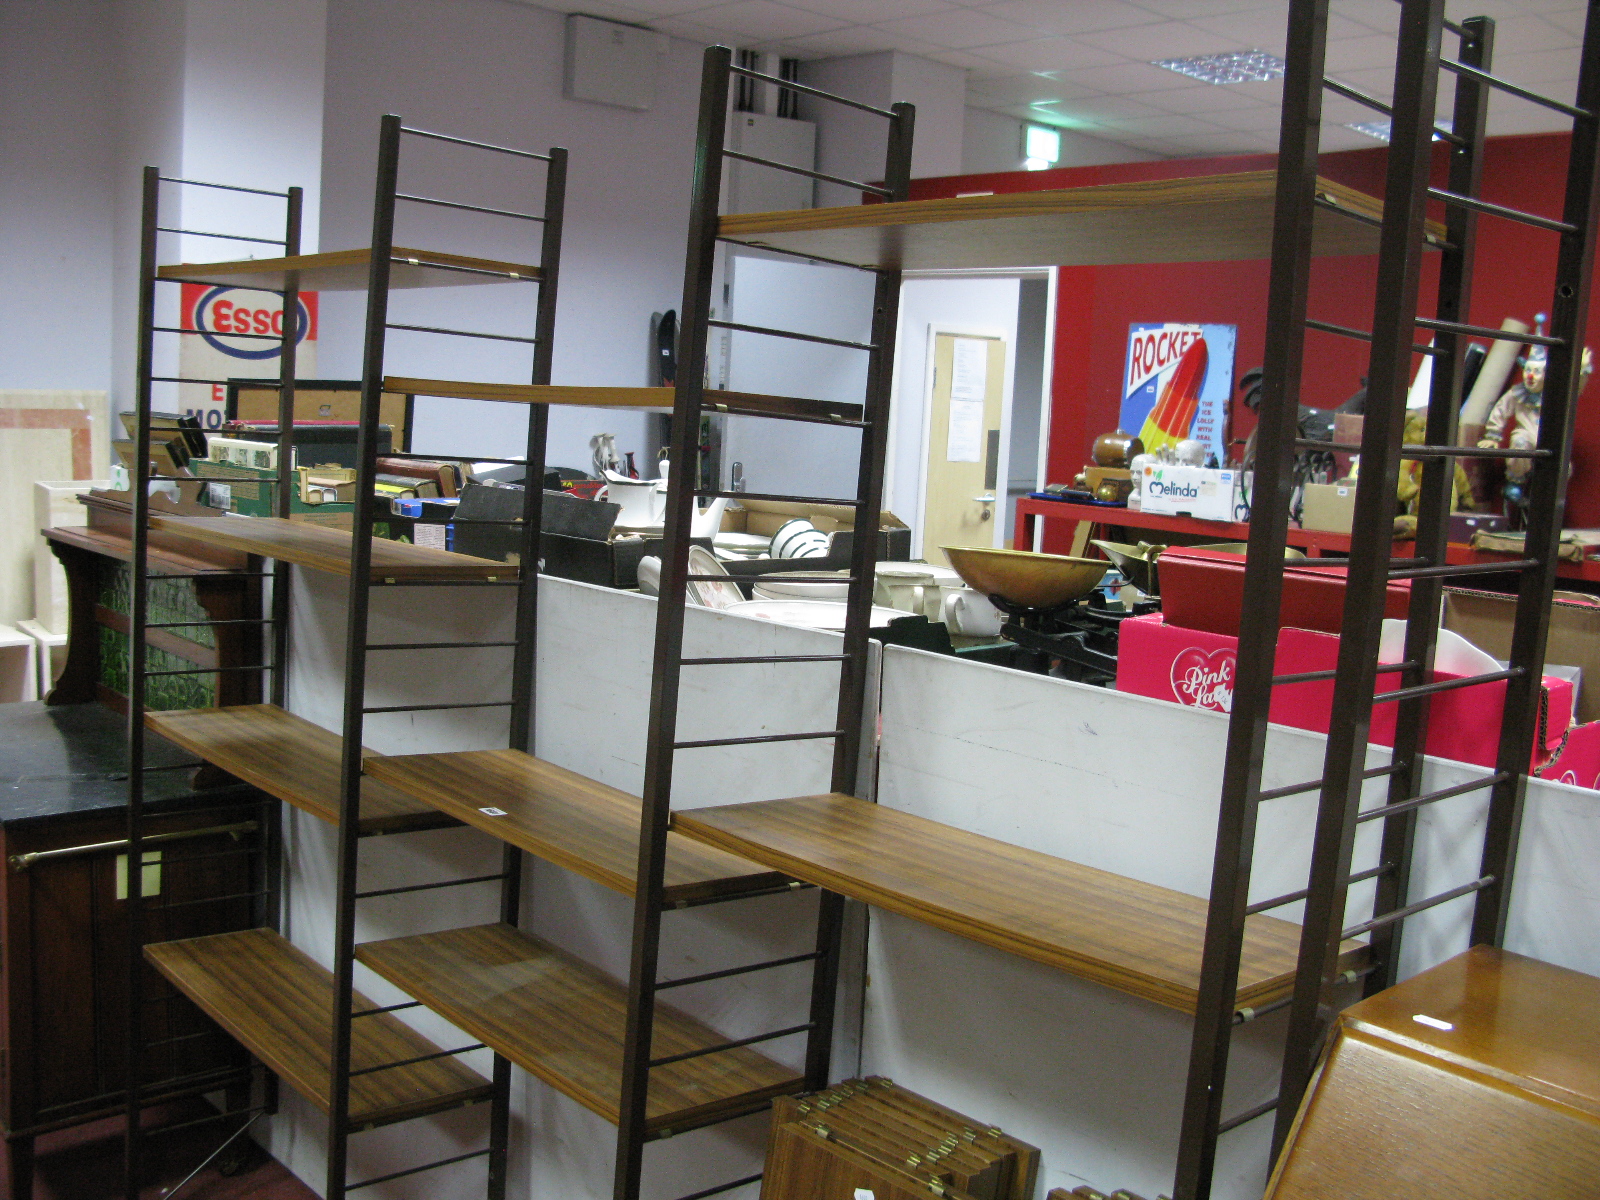 Ladderax Type Bookshelves, with adjustable shelves.